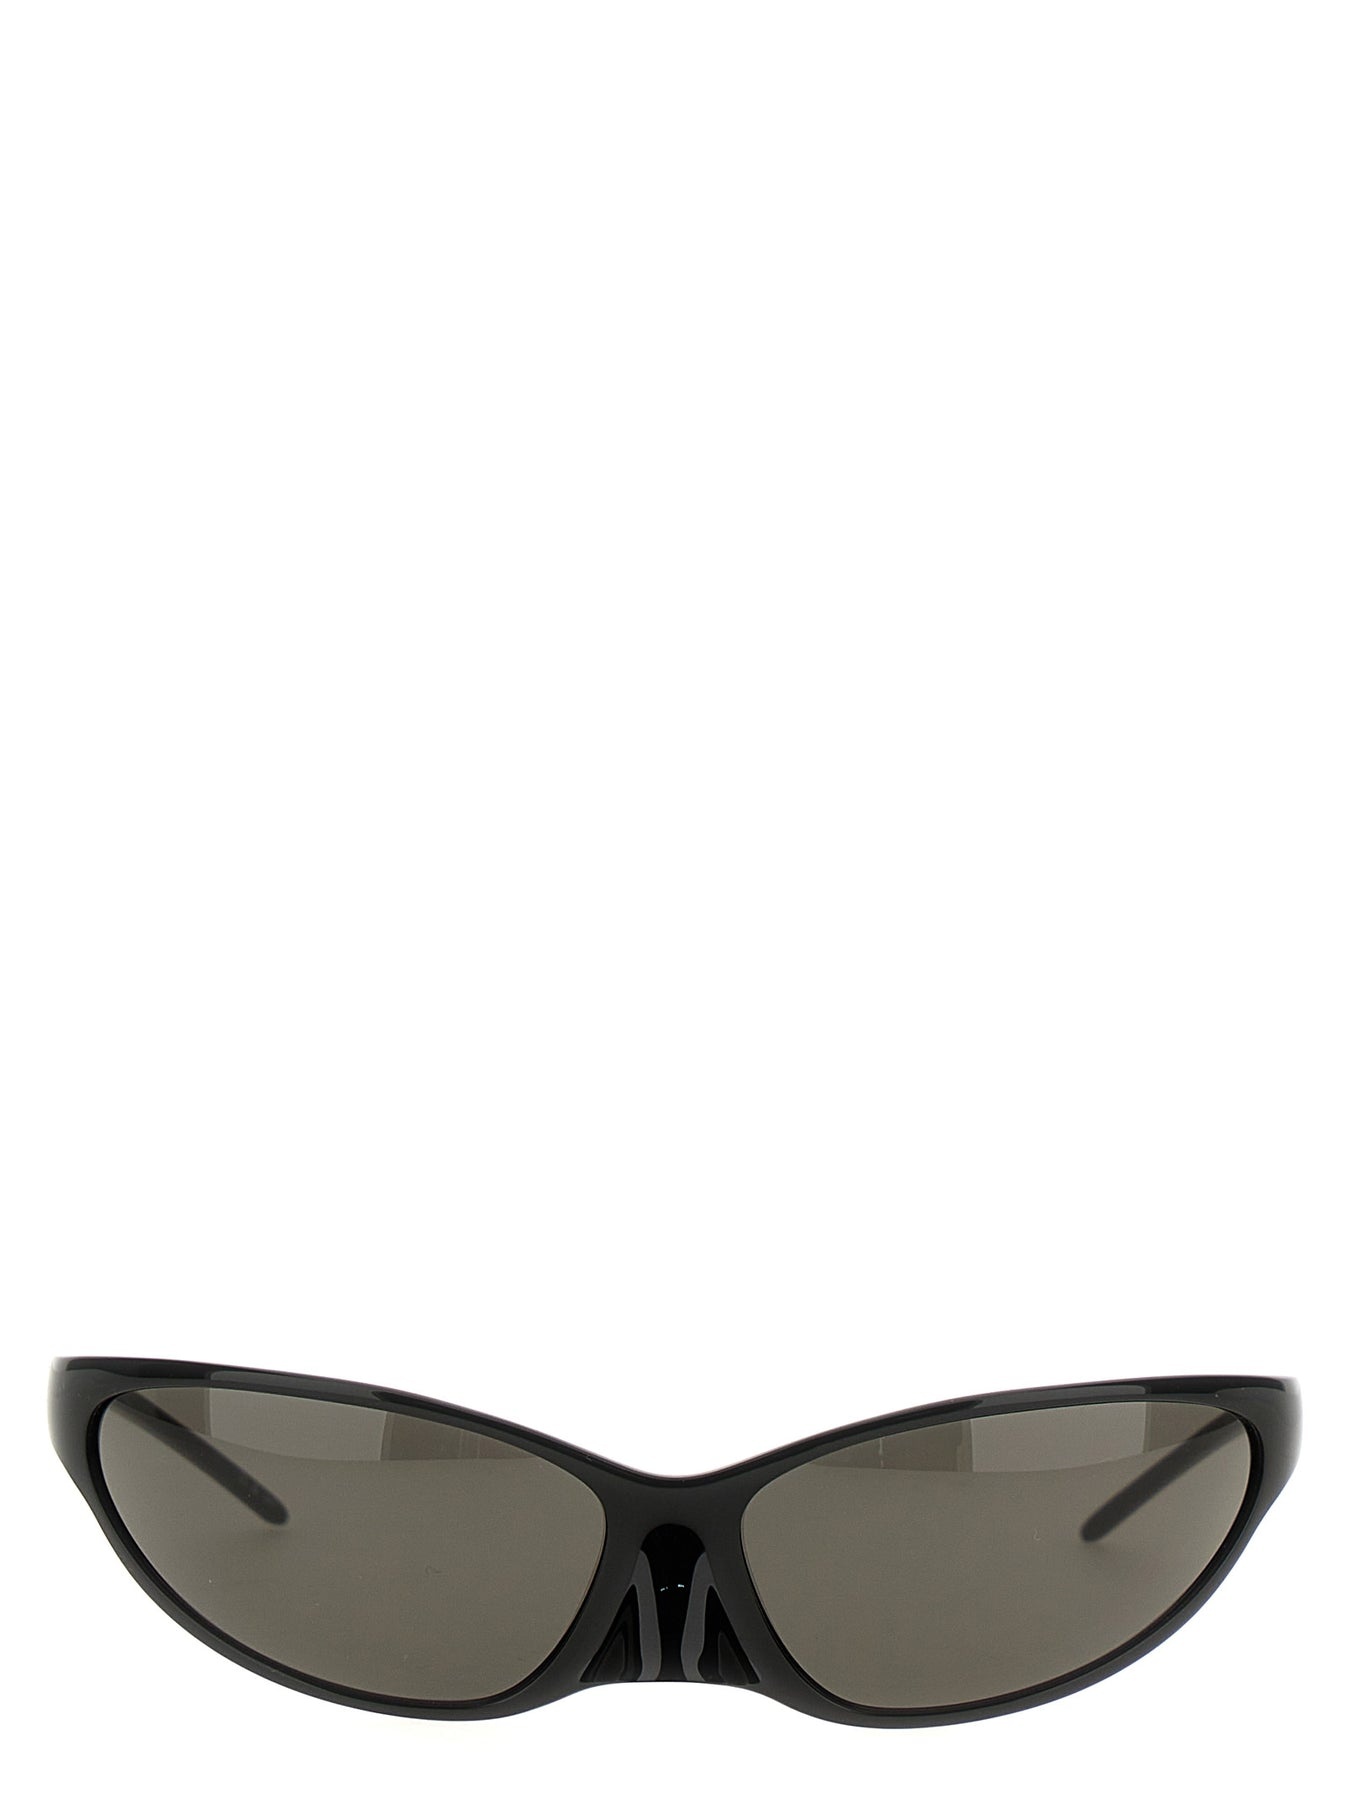 4g Cat Sunglasses Black - 1